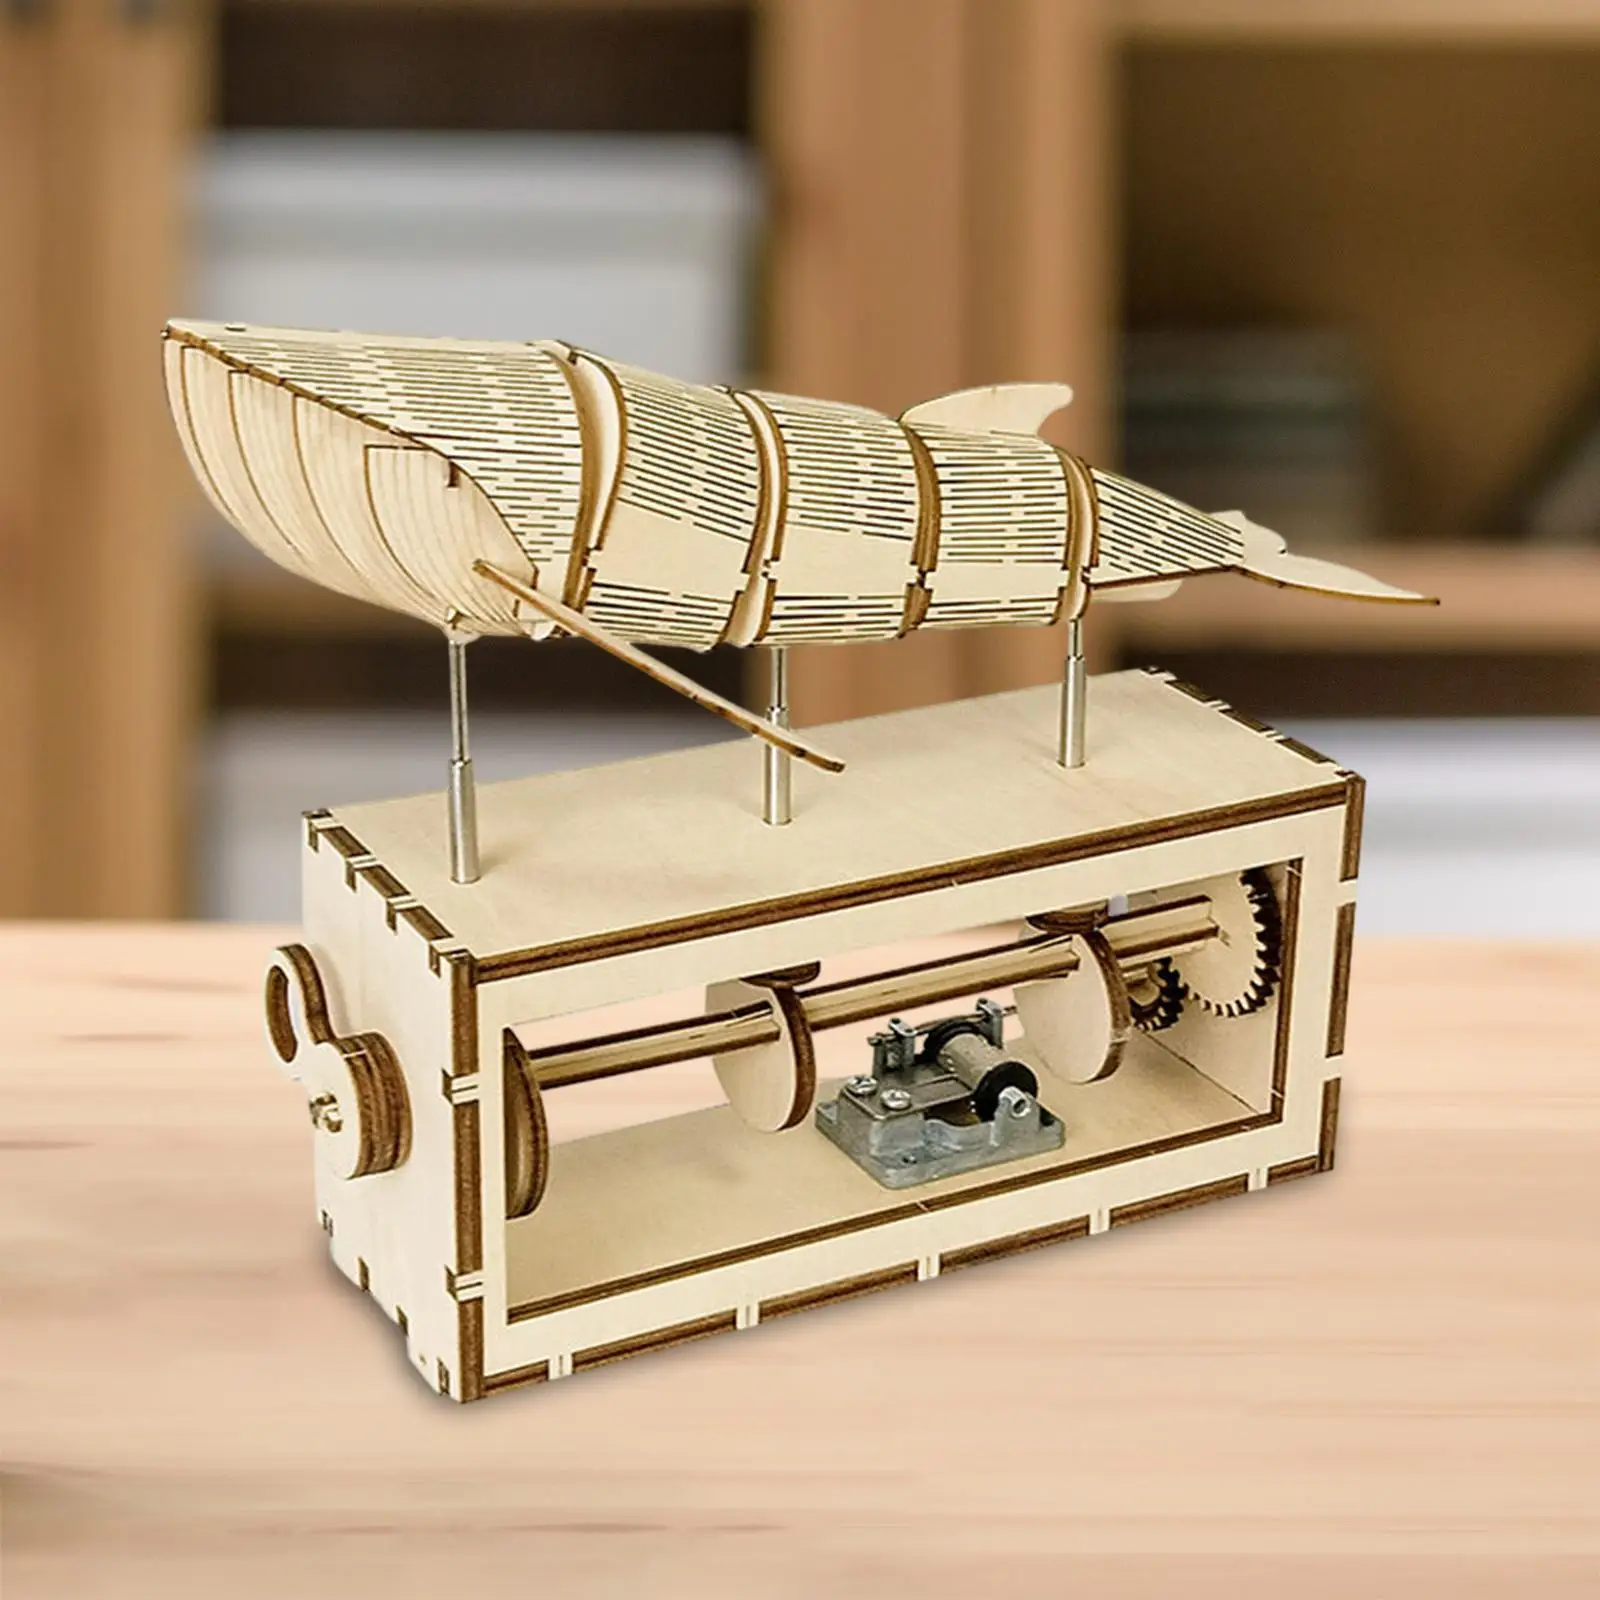 3D Wooden Puzzle Hand Crank Music Box Mechanical Music Box Crafts for Granddaughter Family Desktop Ornament Children Girlfriend